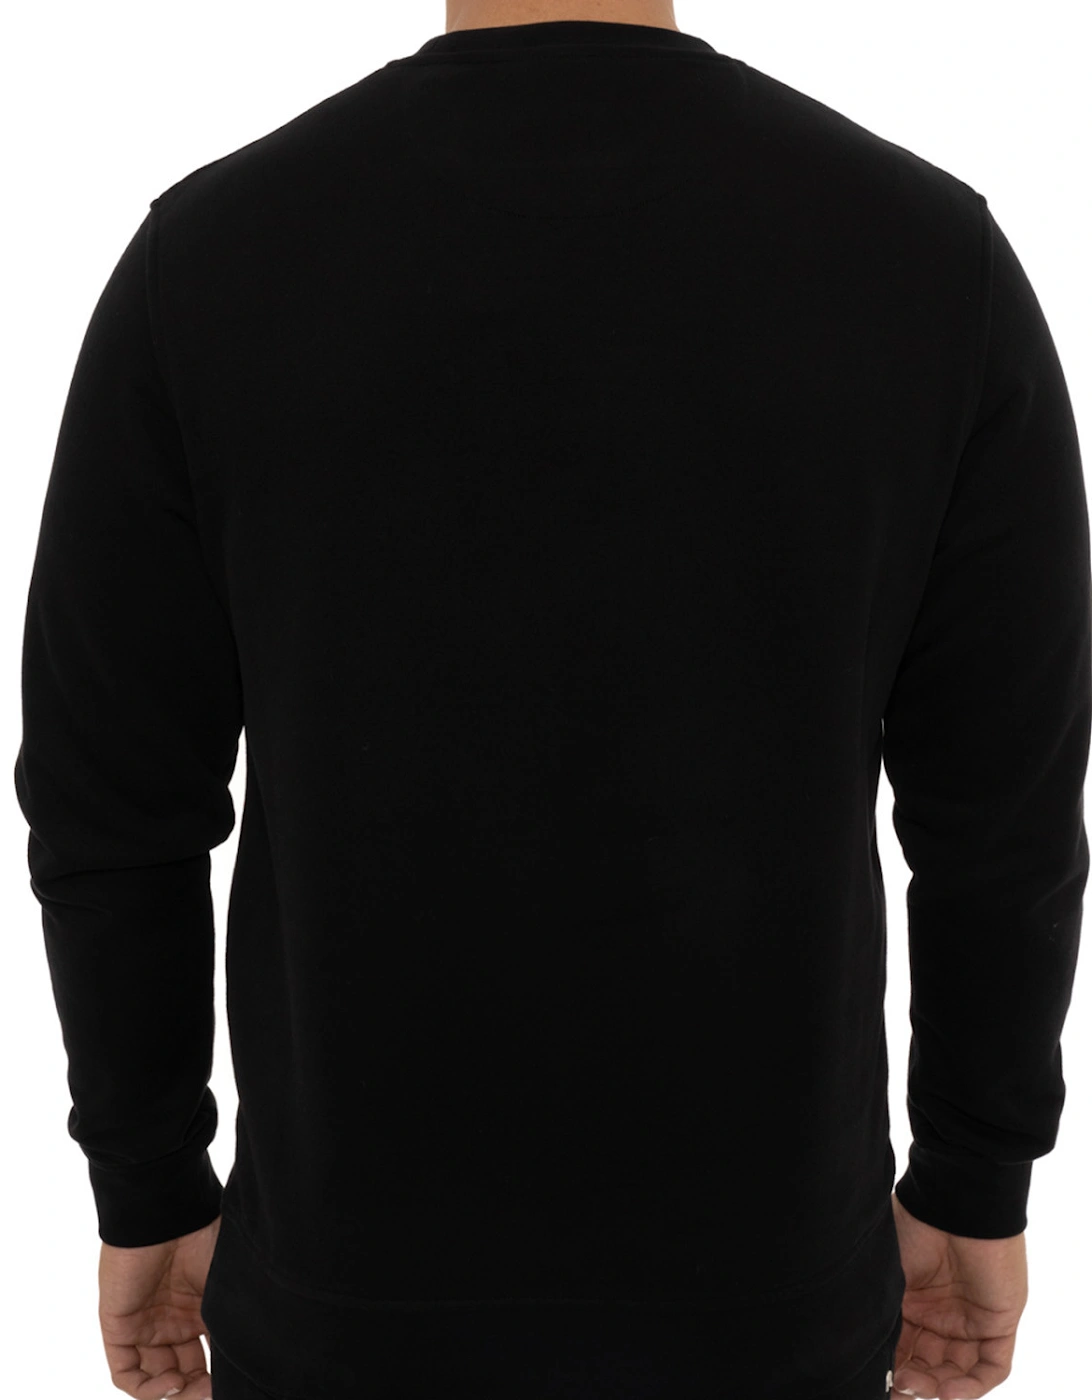 Mens Signature Sweatshirt (Black)